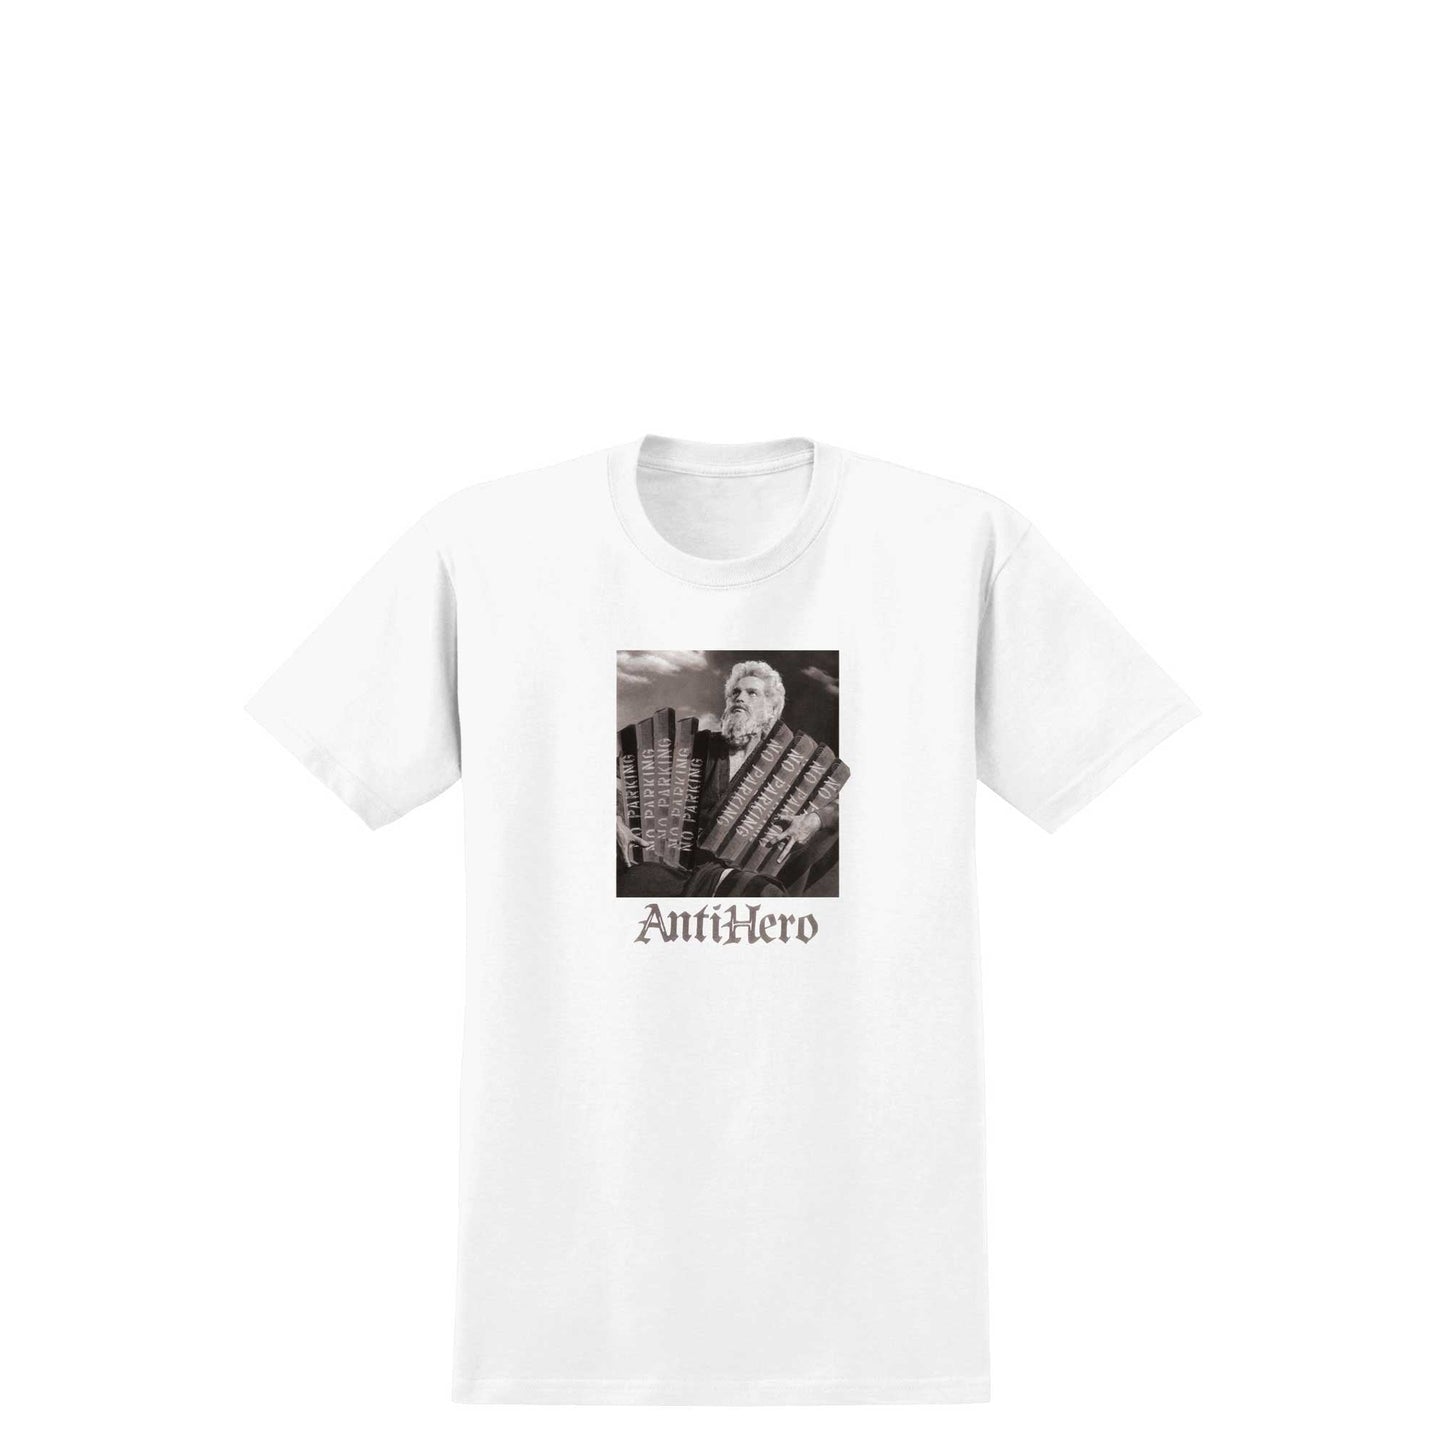 Anti Hero The Ten Curbmandments S/S T-Shirt, white w/ photo print - Tiki Room Skateboards - 1